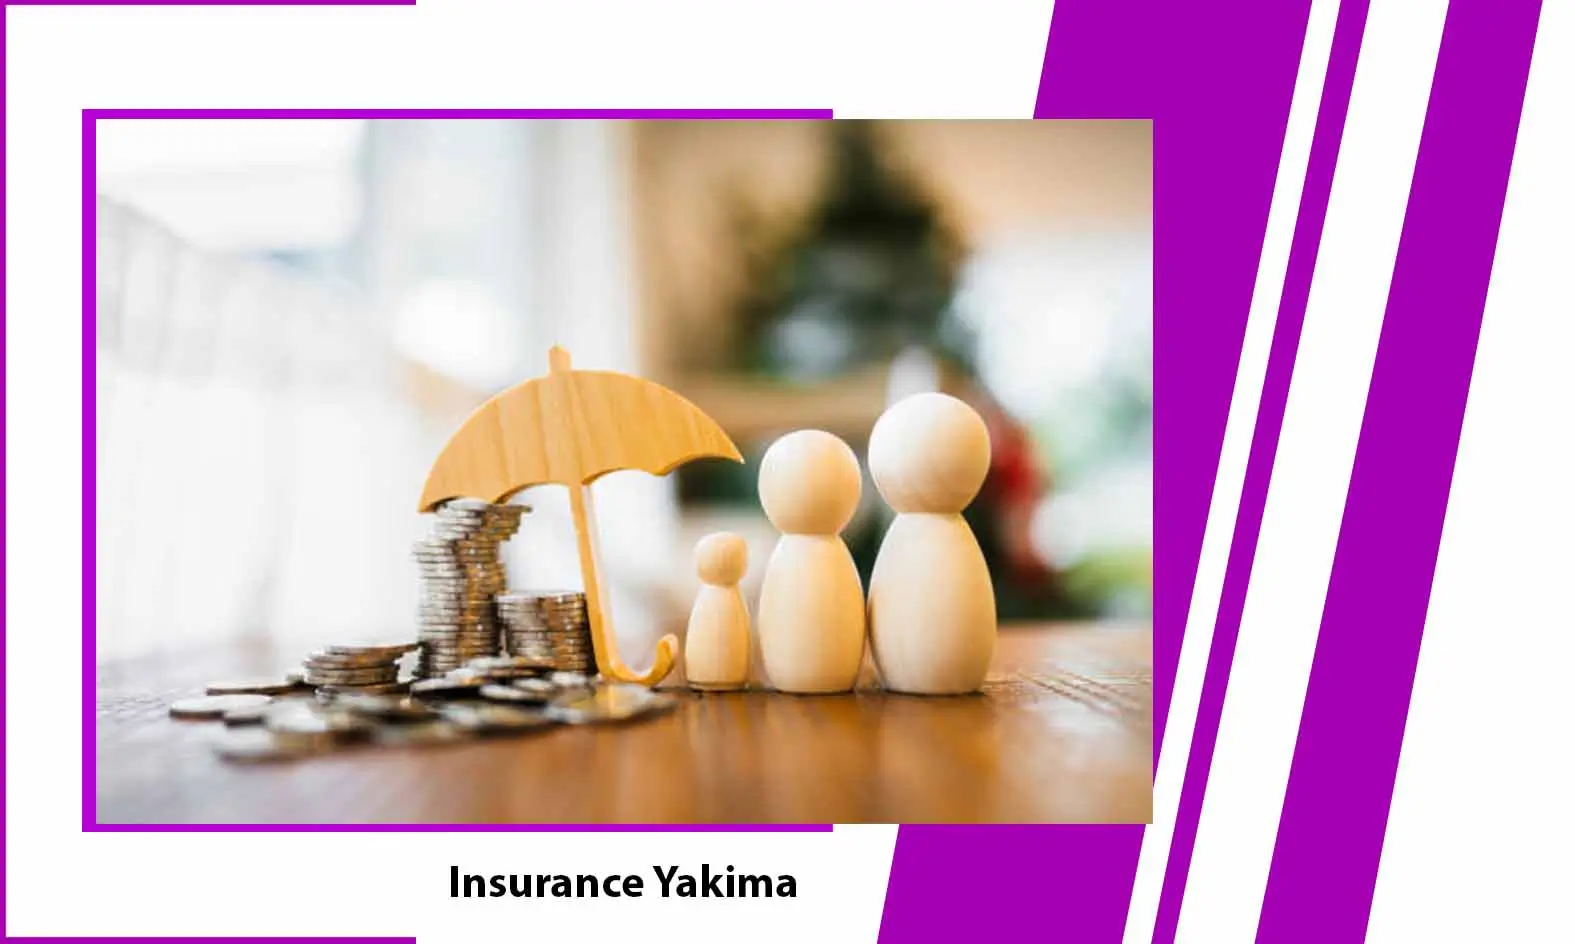 Insurance Yakima - Types & Factors Affecting It